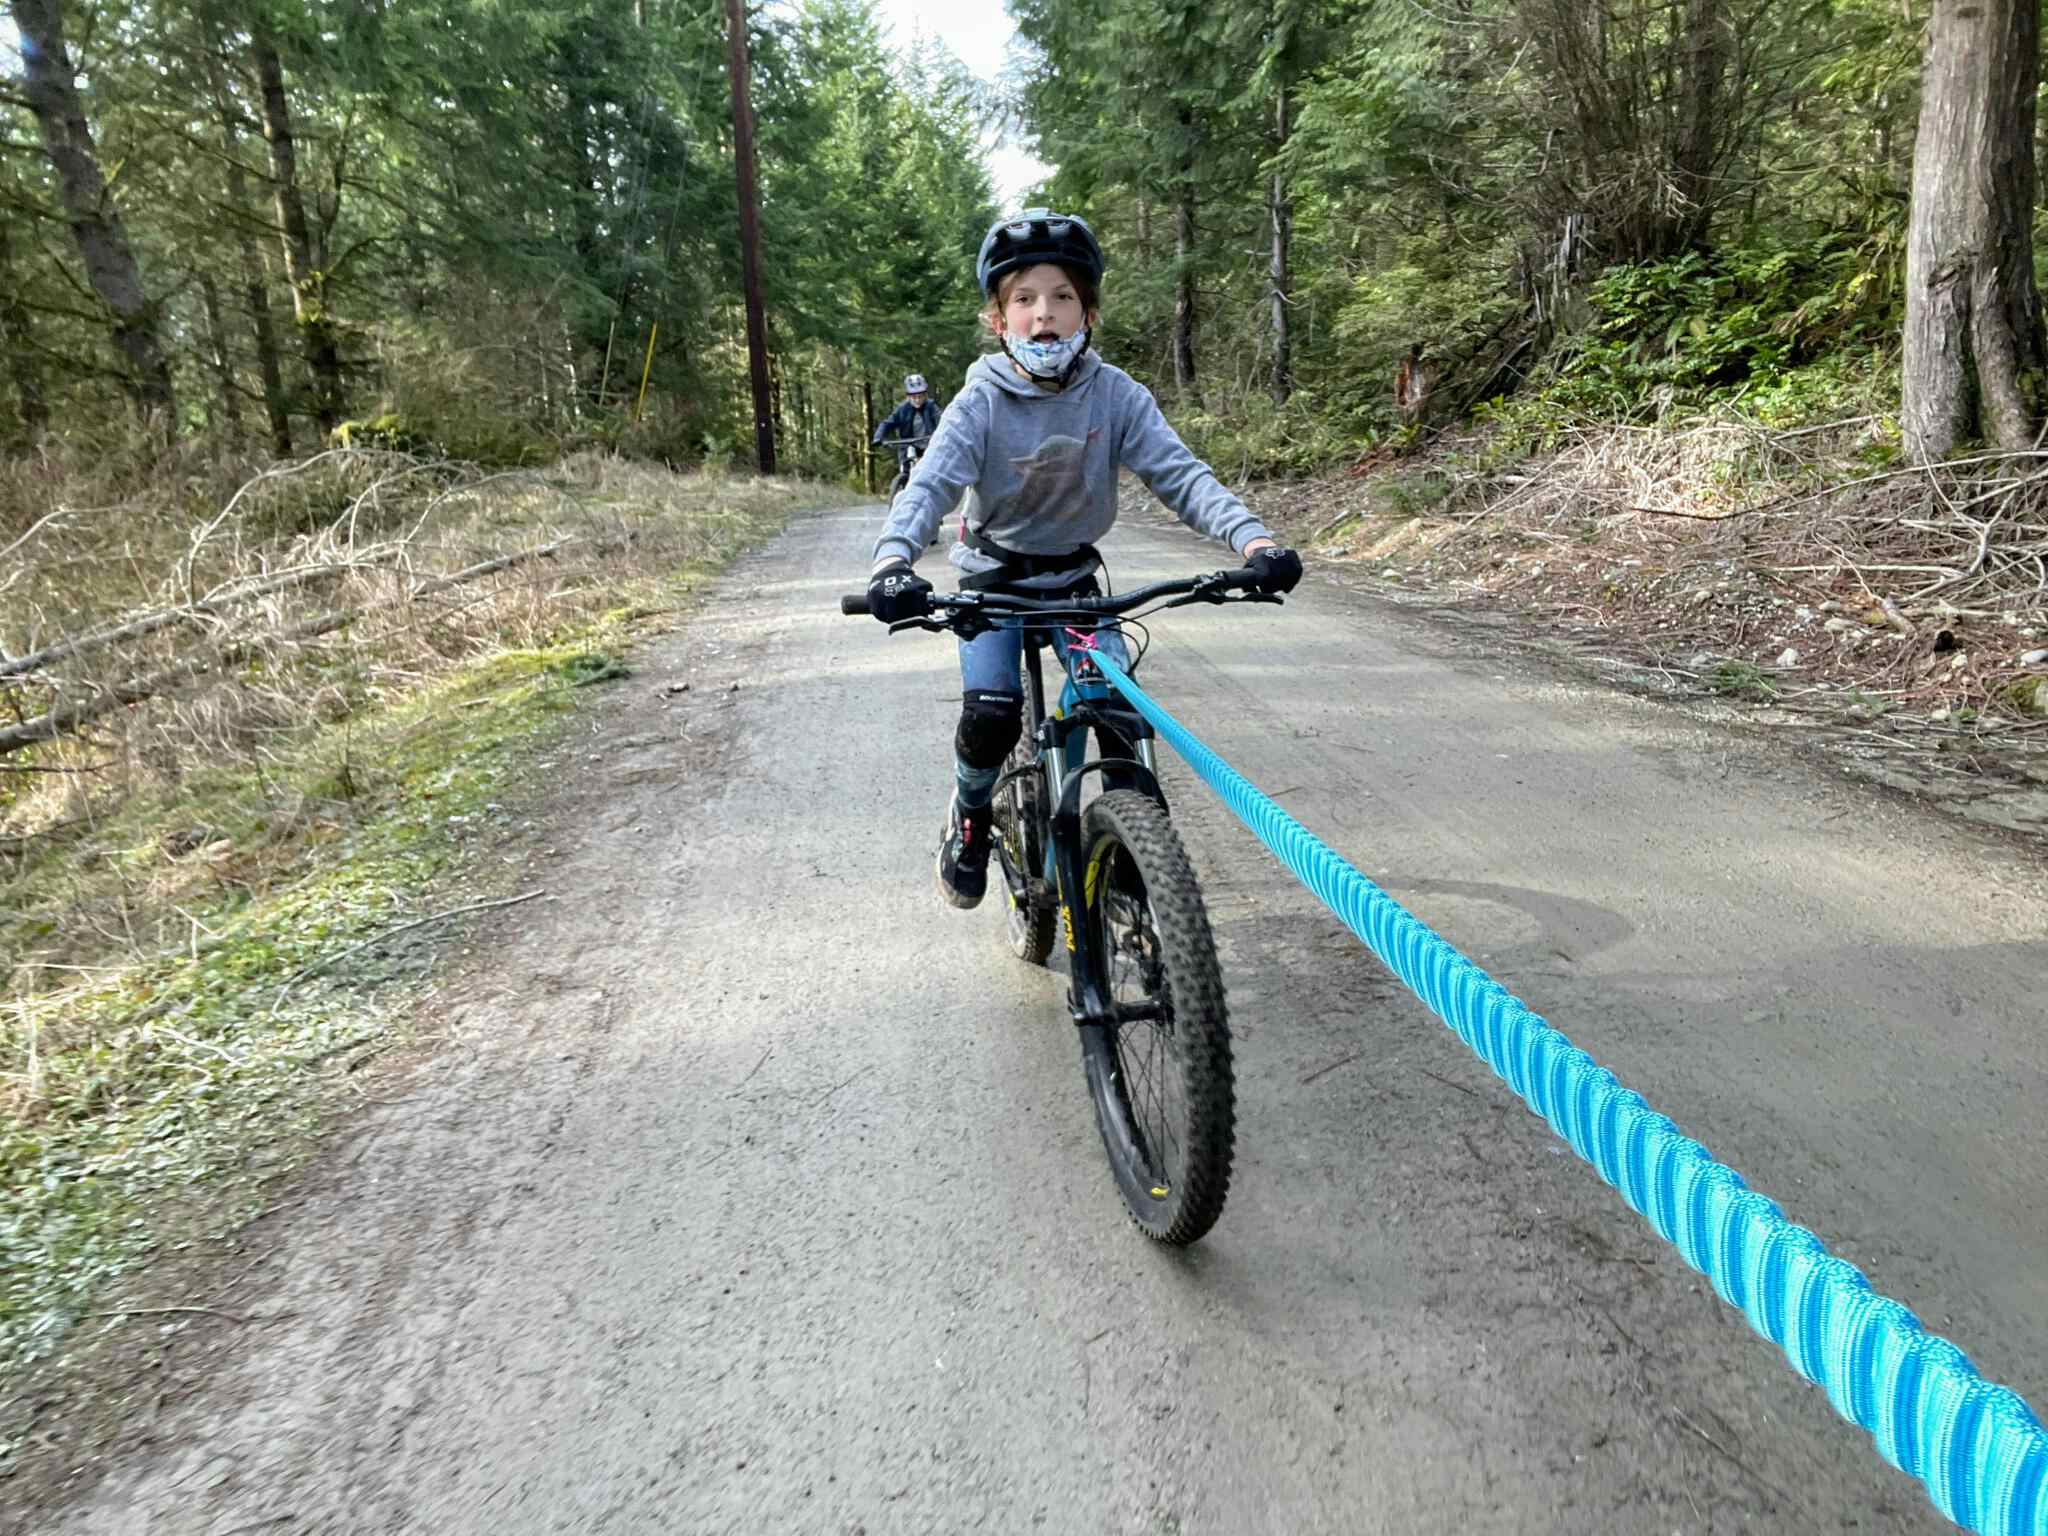 Kids Ride Shotgun Bike Tow Rope and Kids Hip Pack Review 